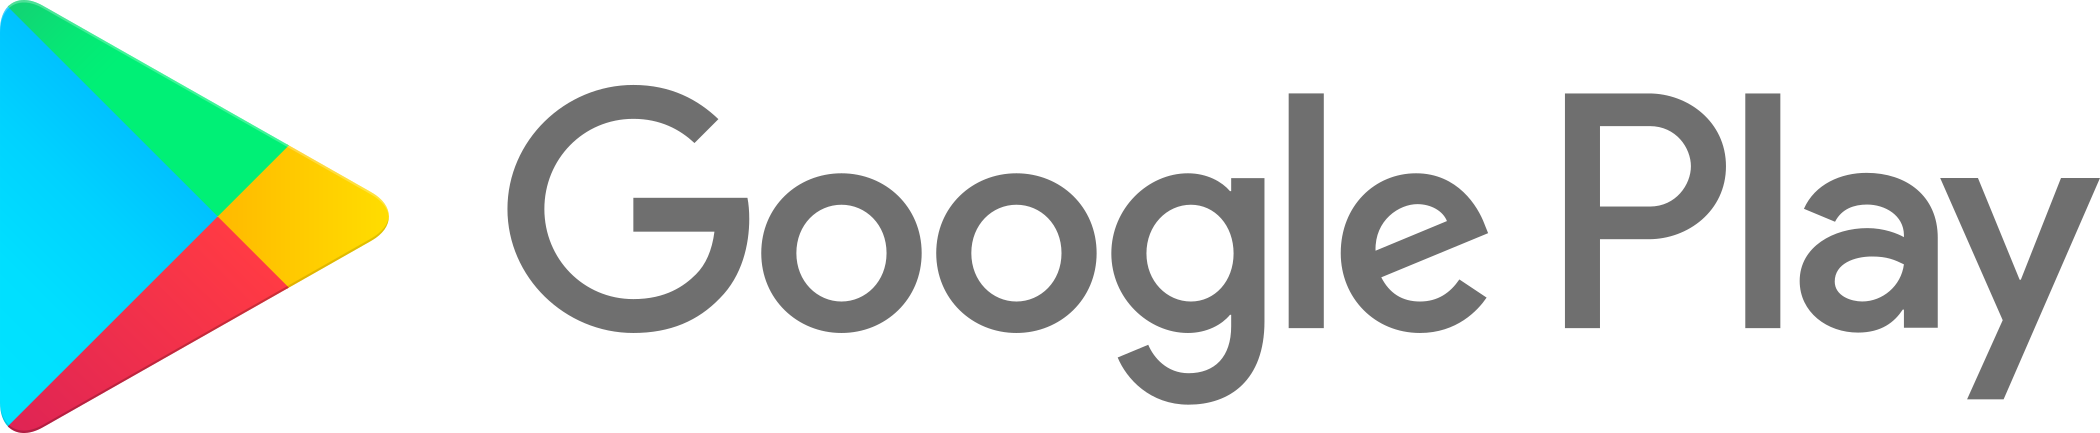 google play logo 1 - Google Play Logo